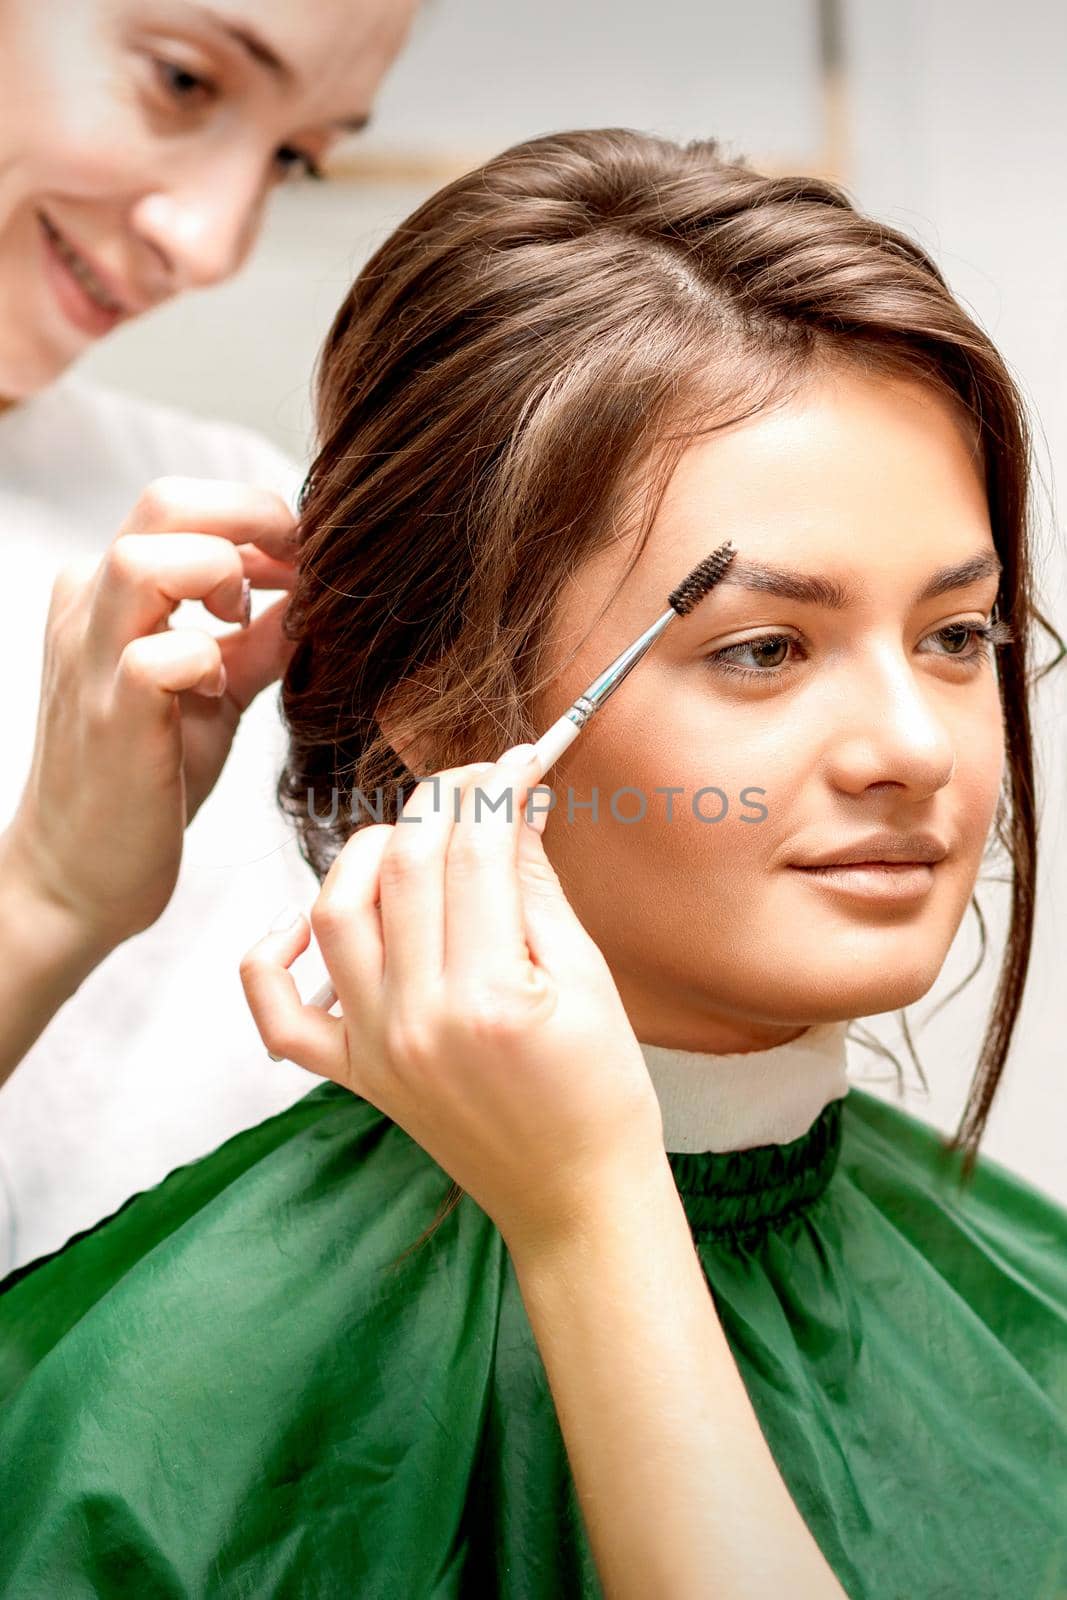 Makeup artist combing eyebrows and hairstylist preparing hairstyle by okskukuruza